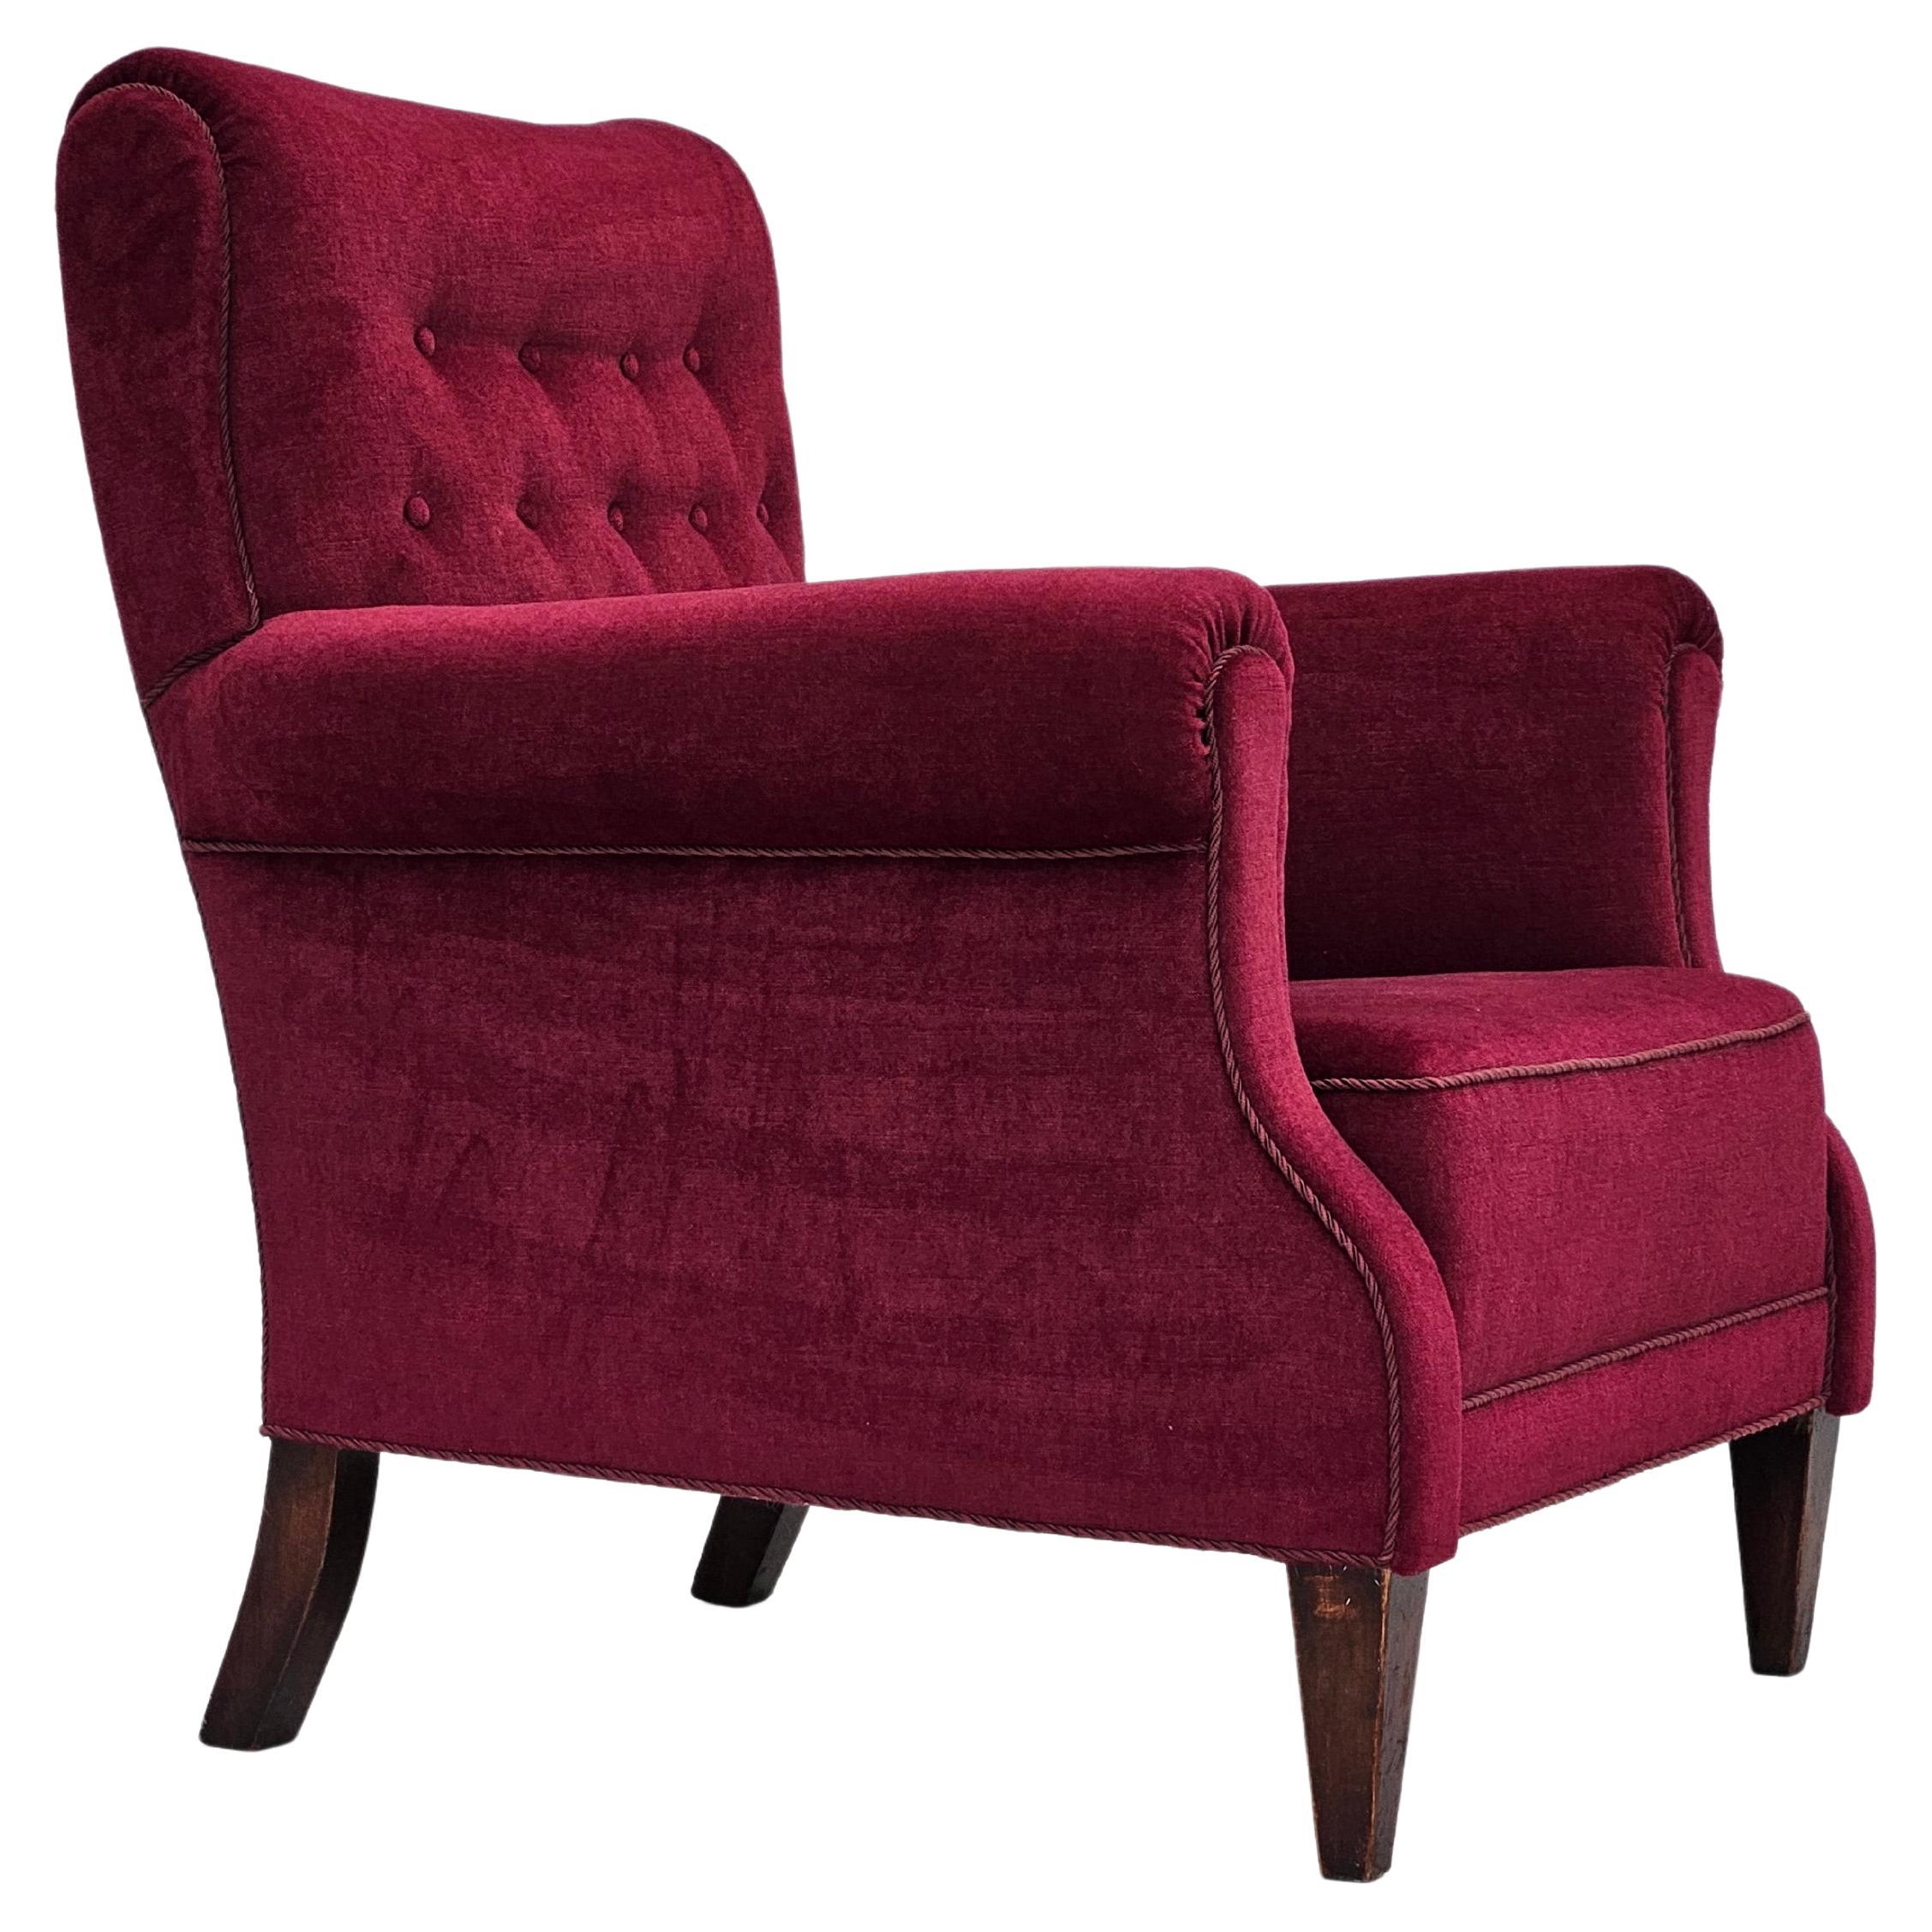 1950s, Danish vintage armchair in cherry-red velvet, original condition.